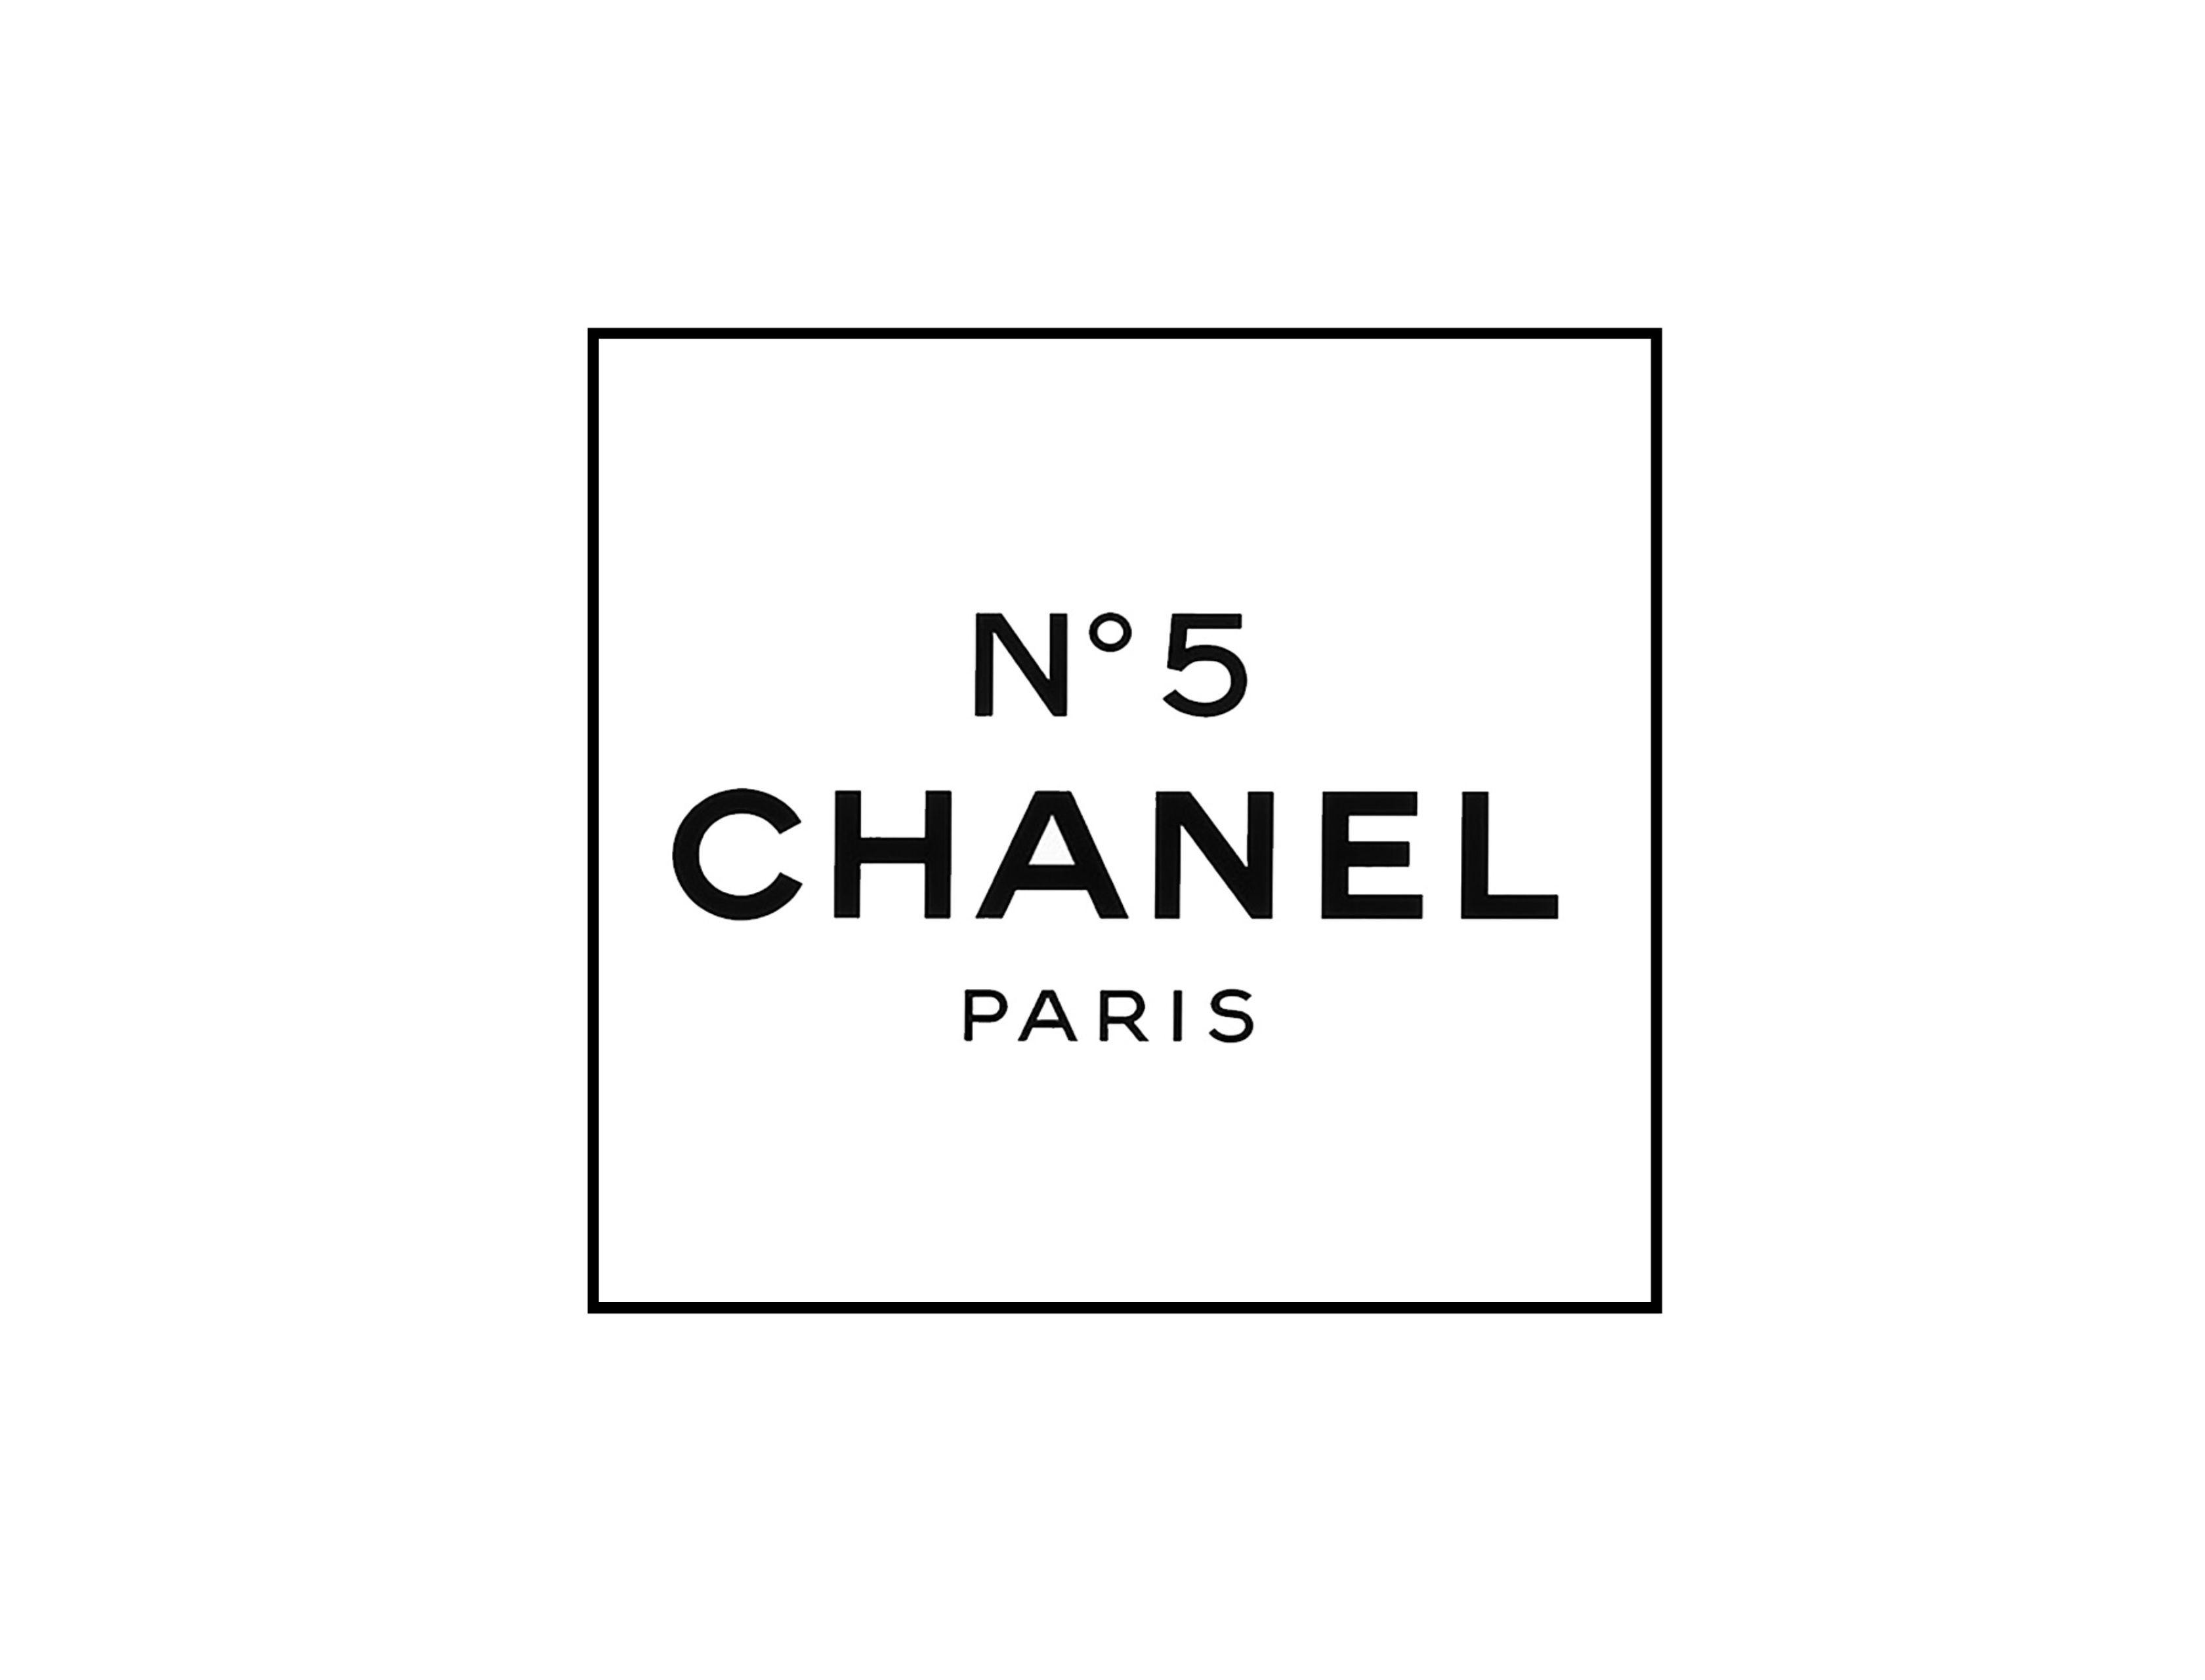 Chanel No. 5 Logo - Chanel No 5 label